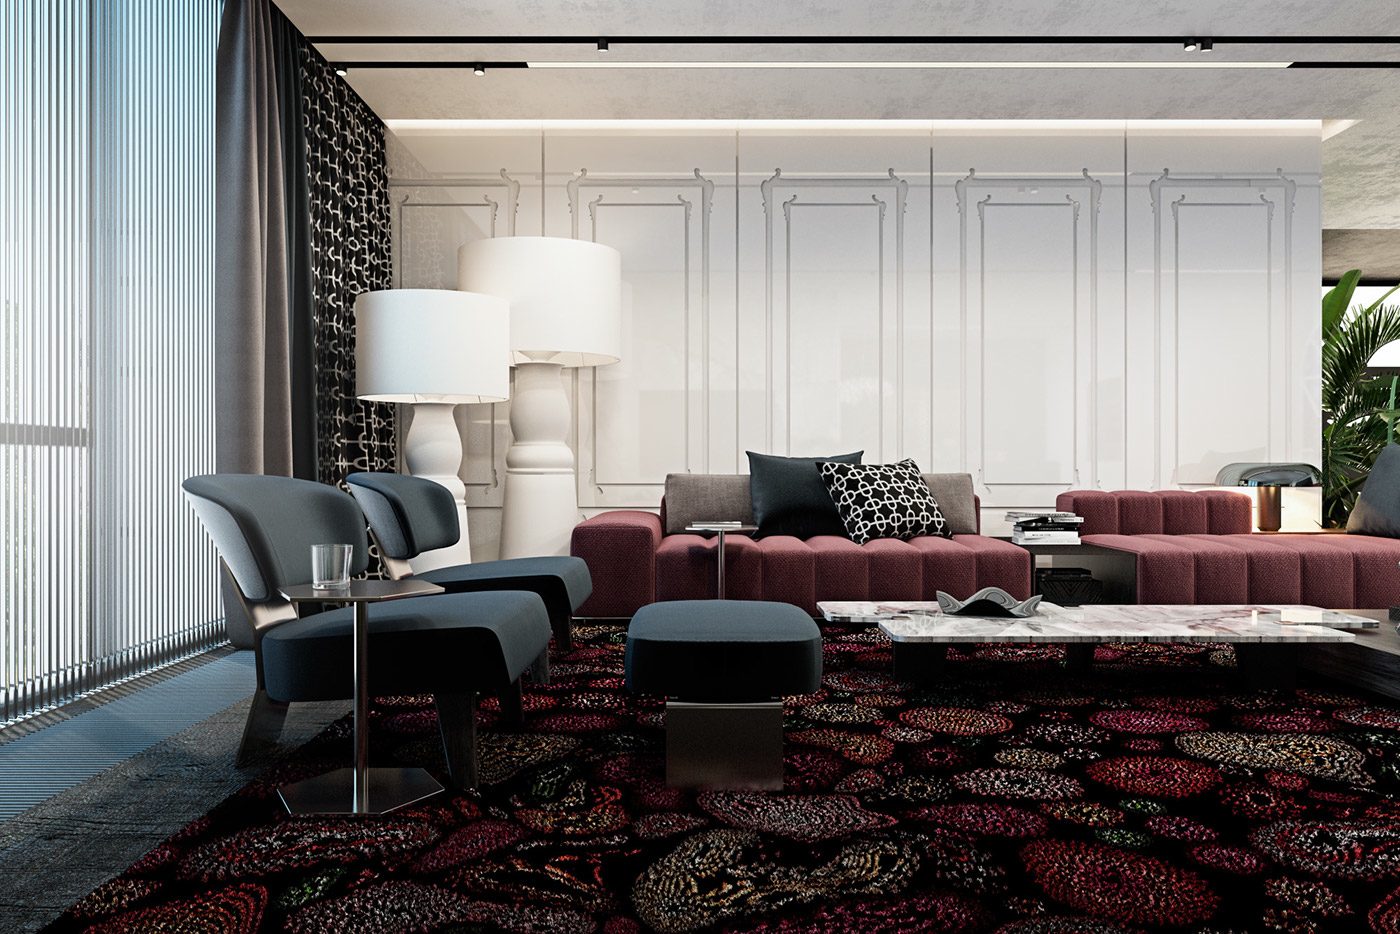 Luxurious living room interior design